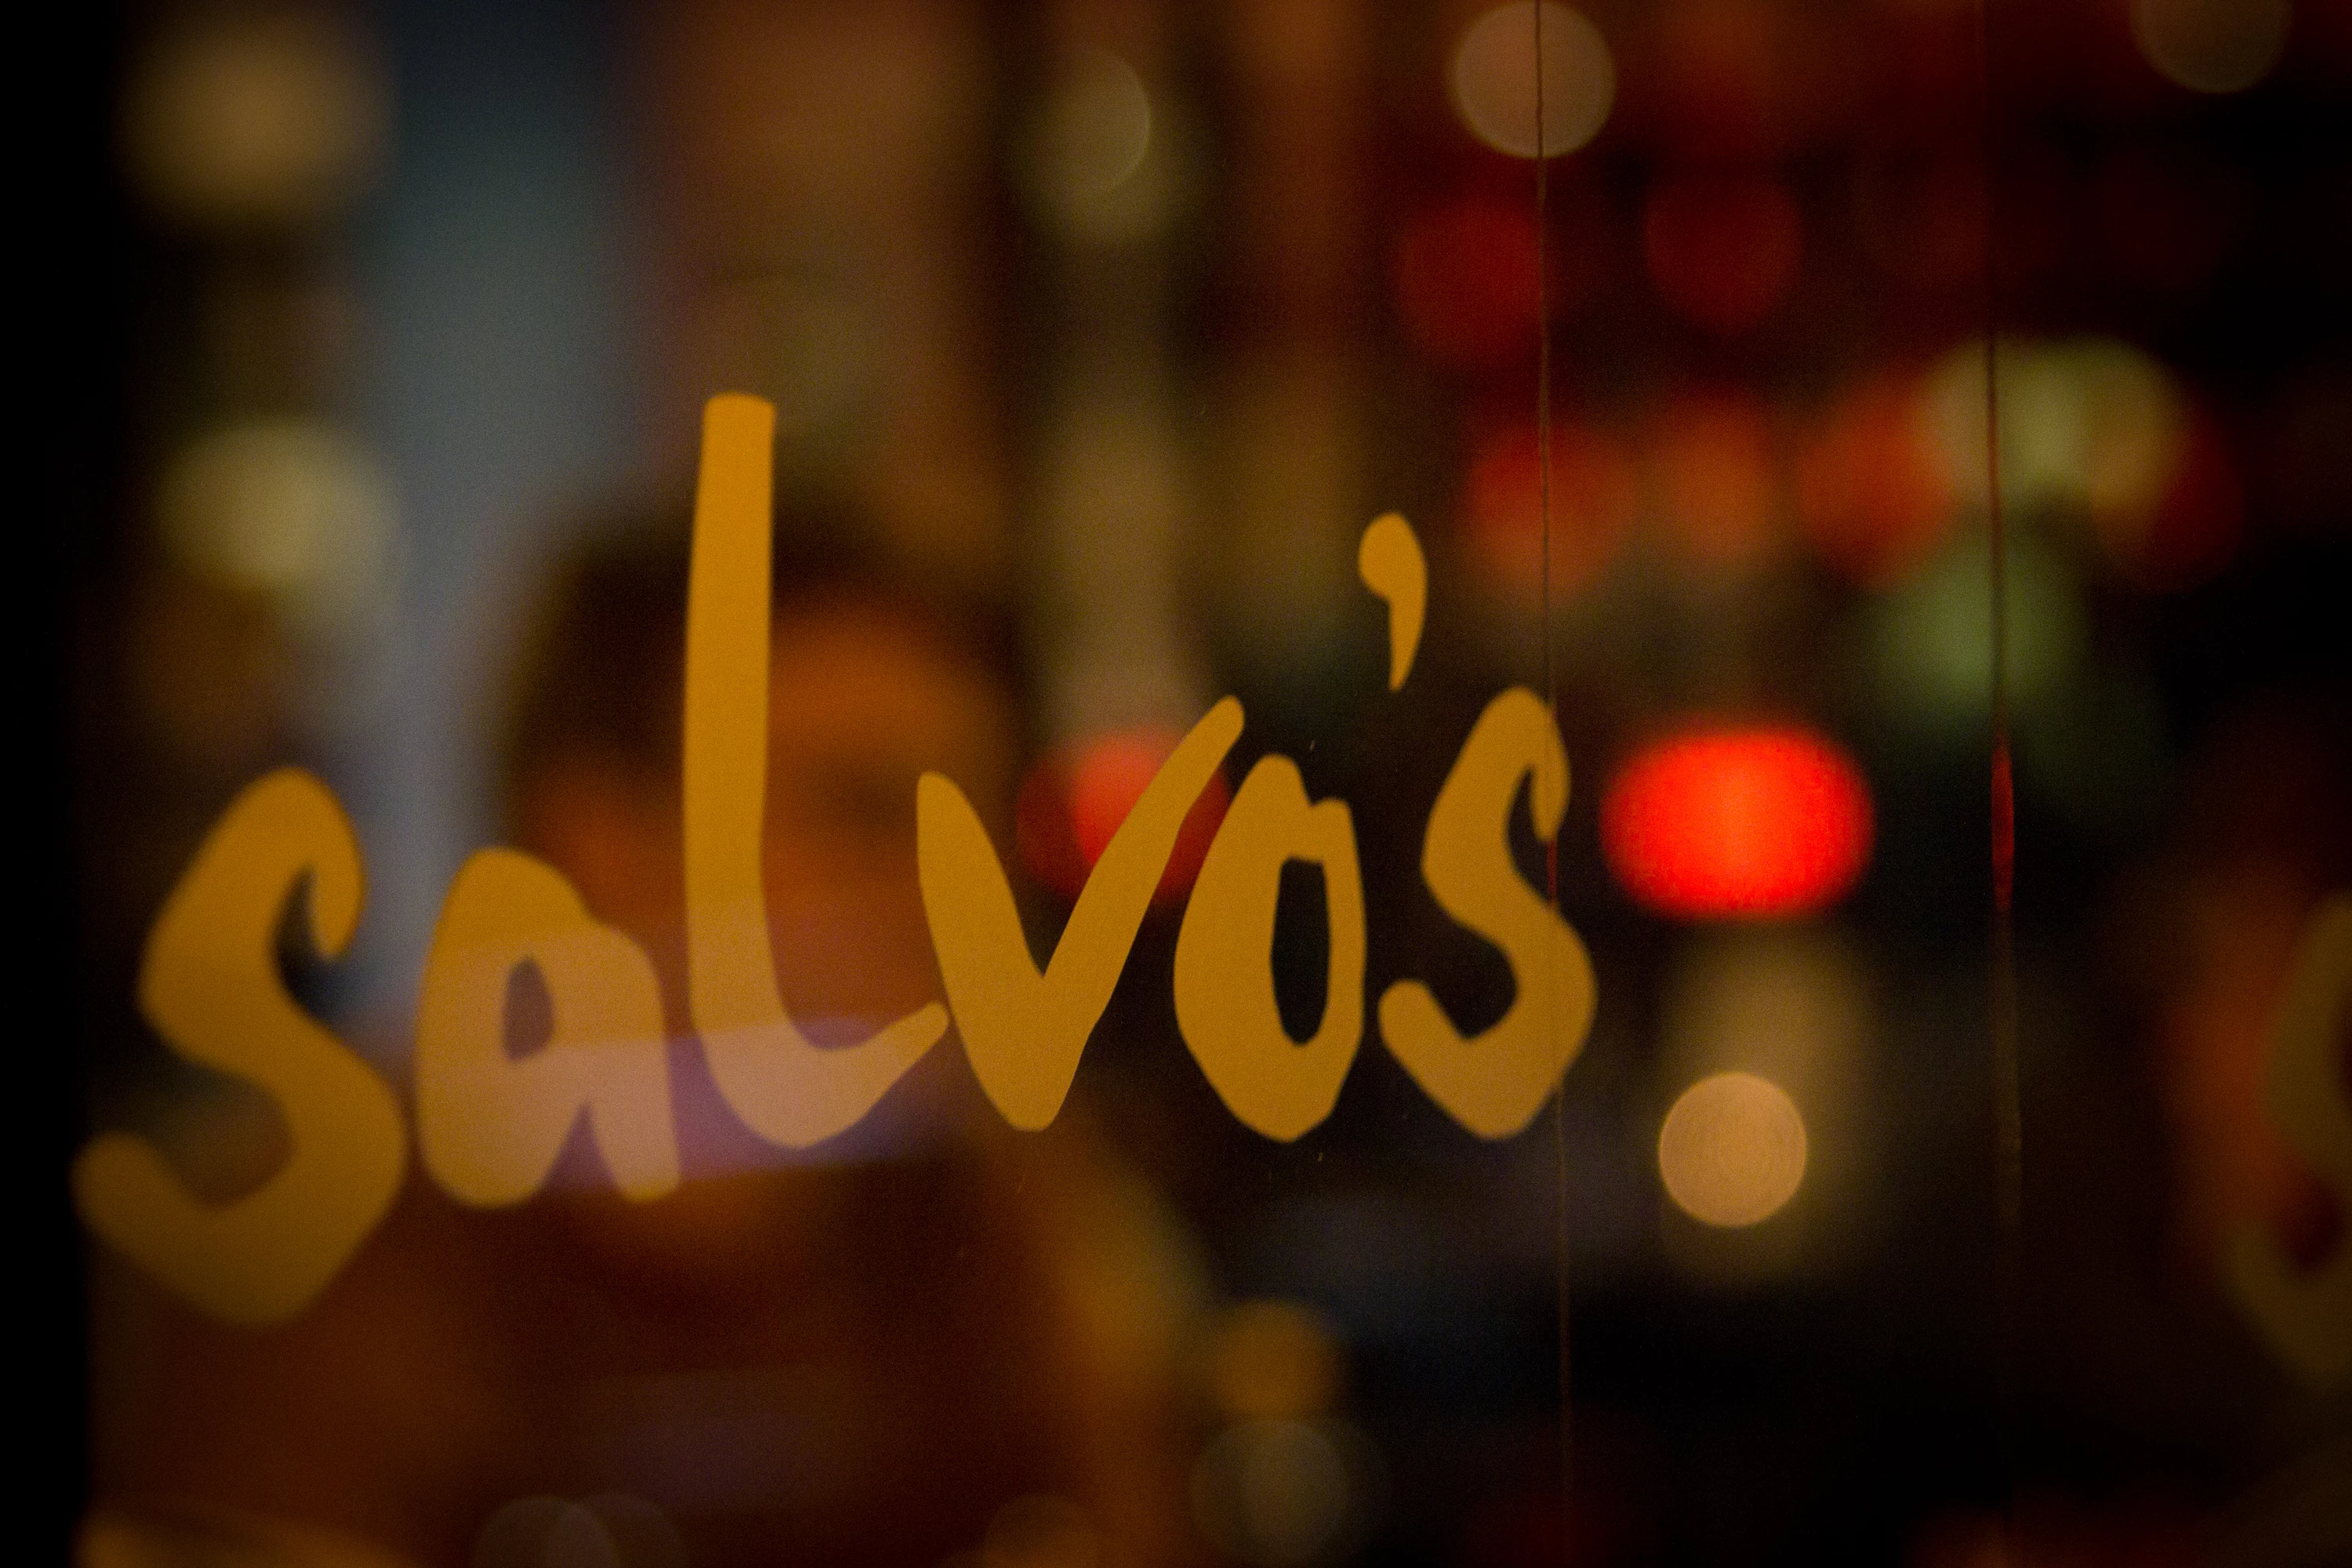 Salvo's